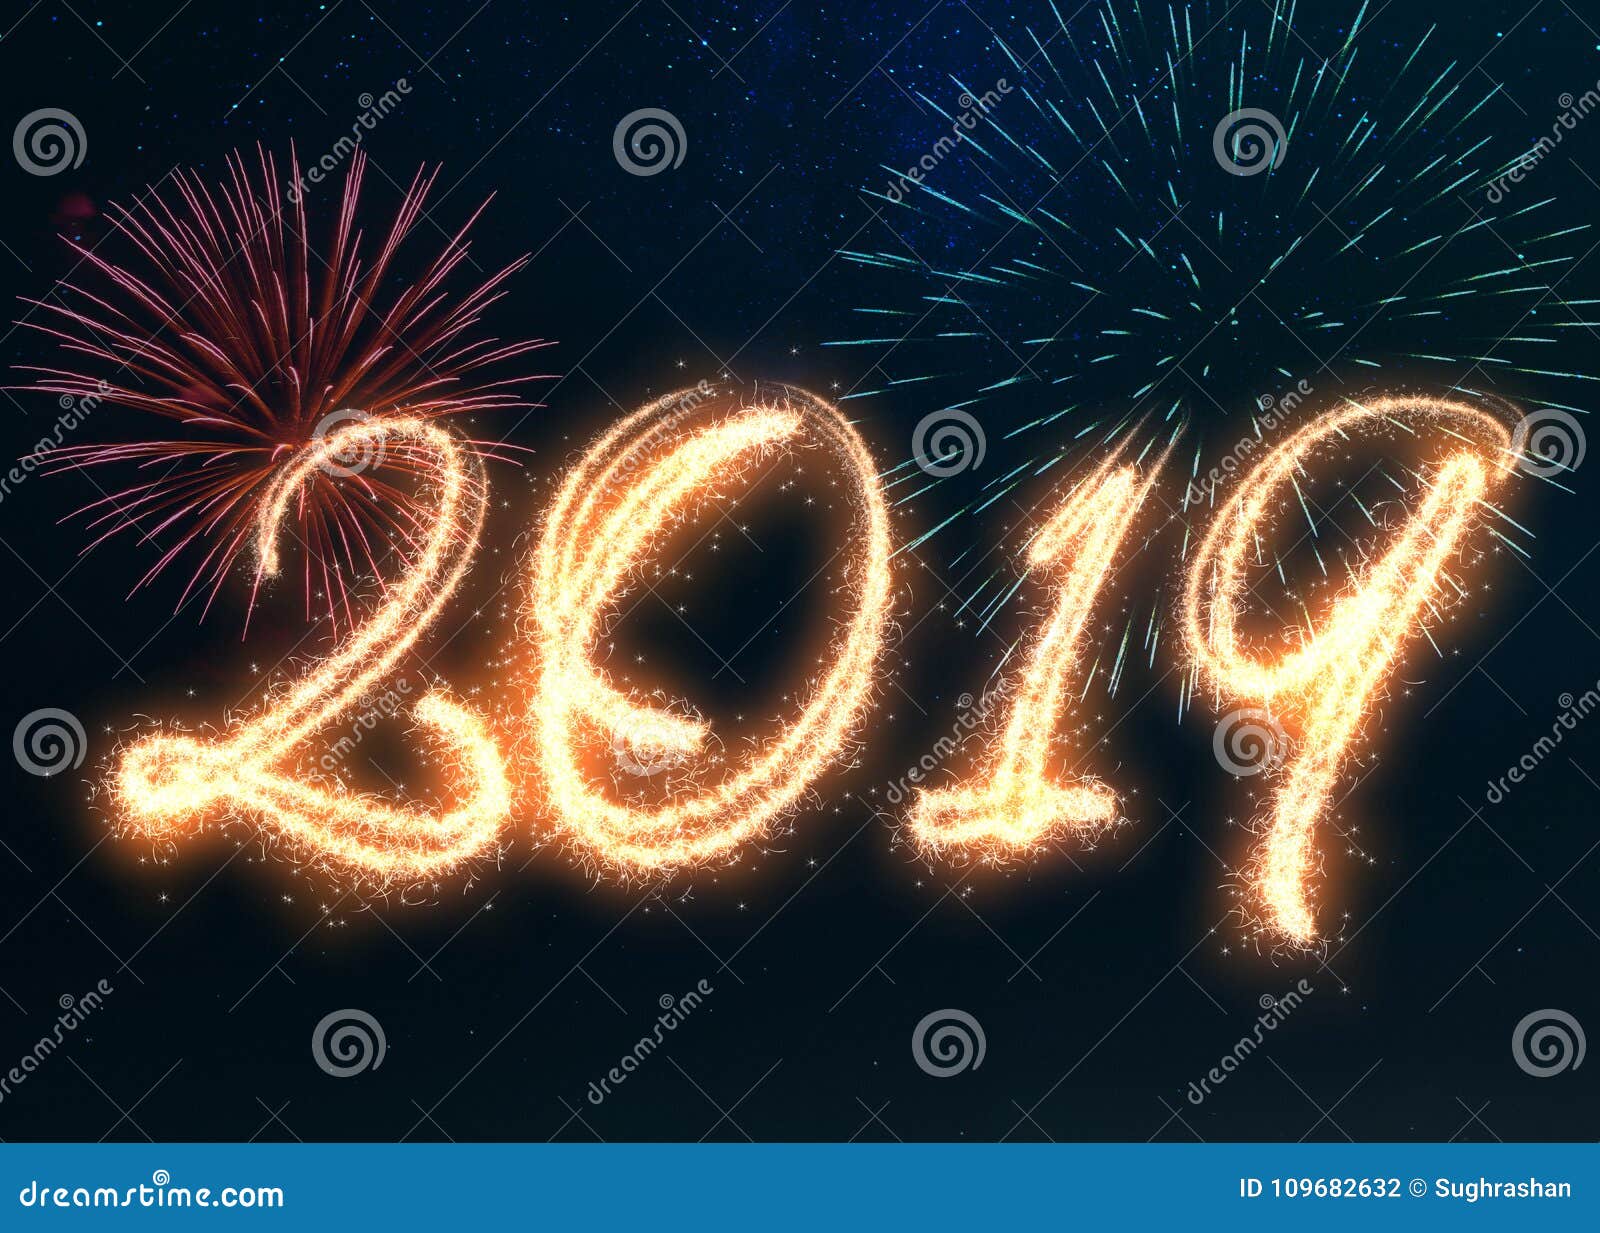 sparkling-happy-new-year-fireworks-written-sparkle-displayed-dark-night-sky-shiny-bright-glowing-festive-holiday-109682632.jpg